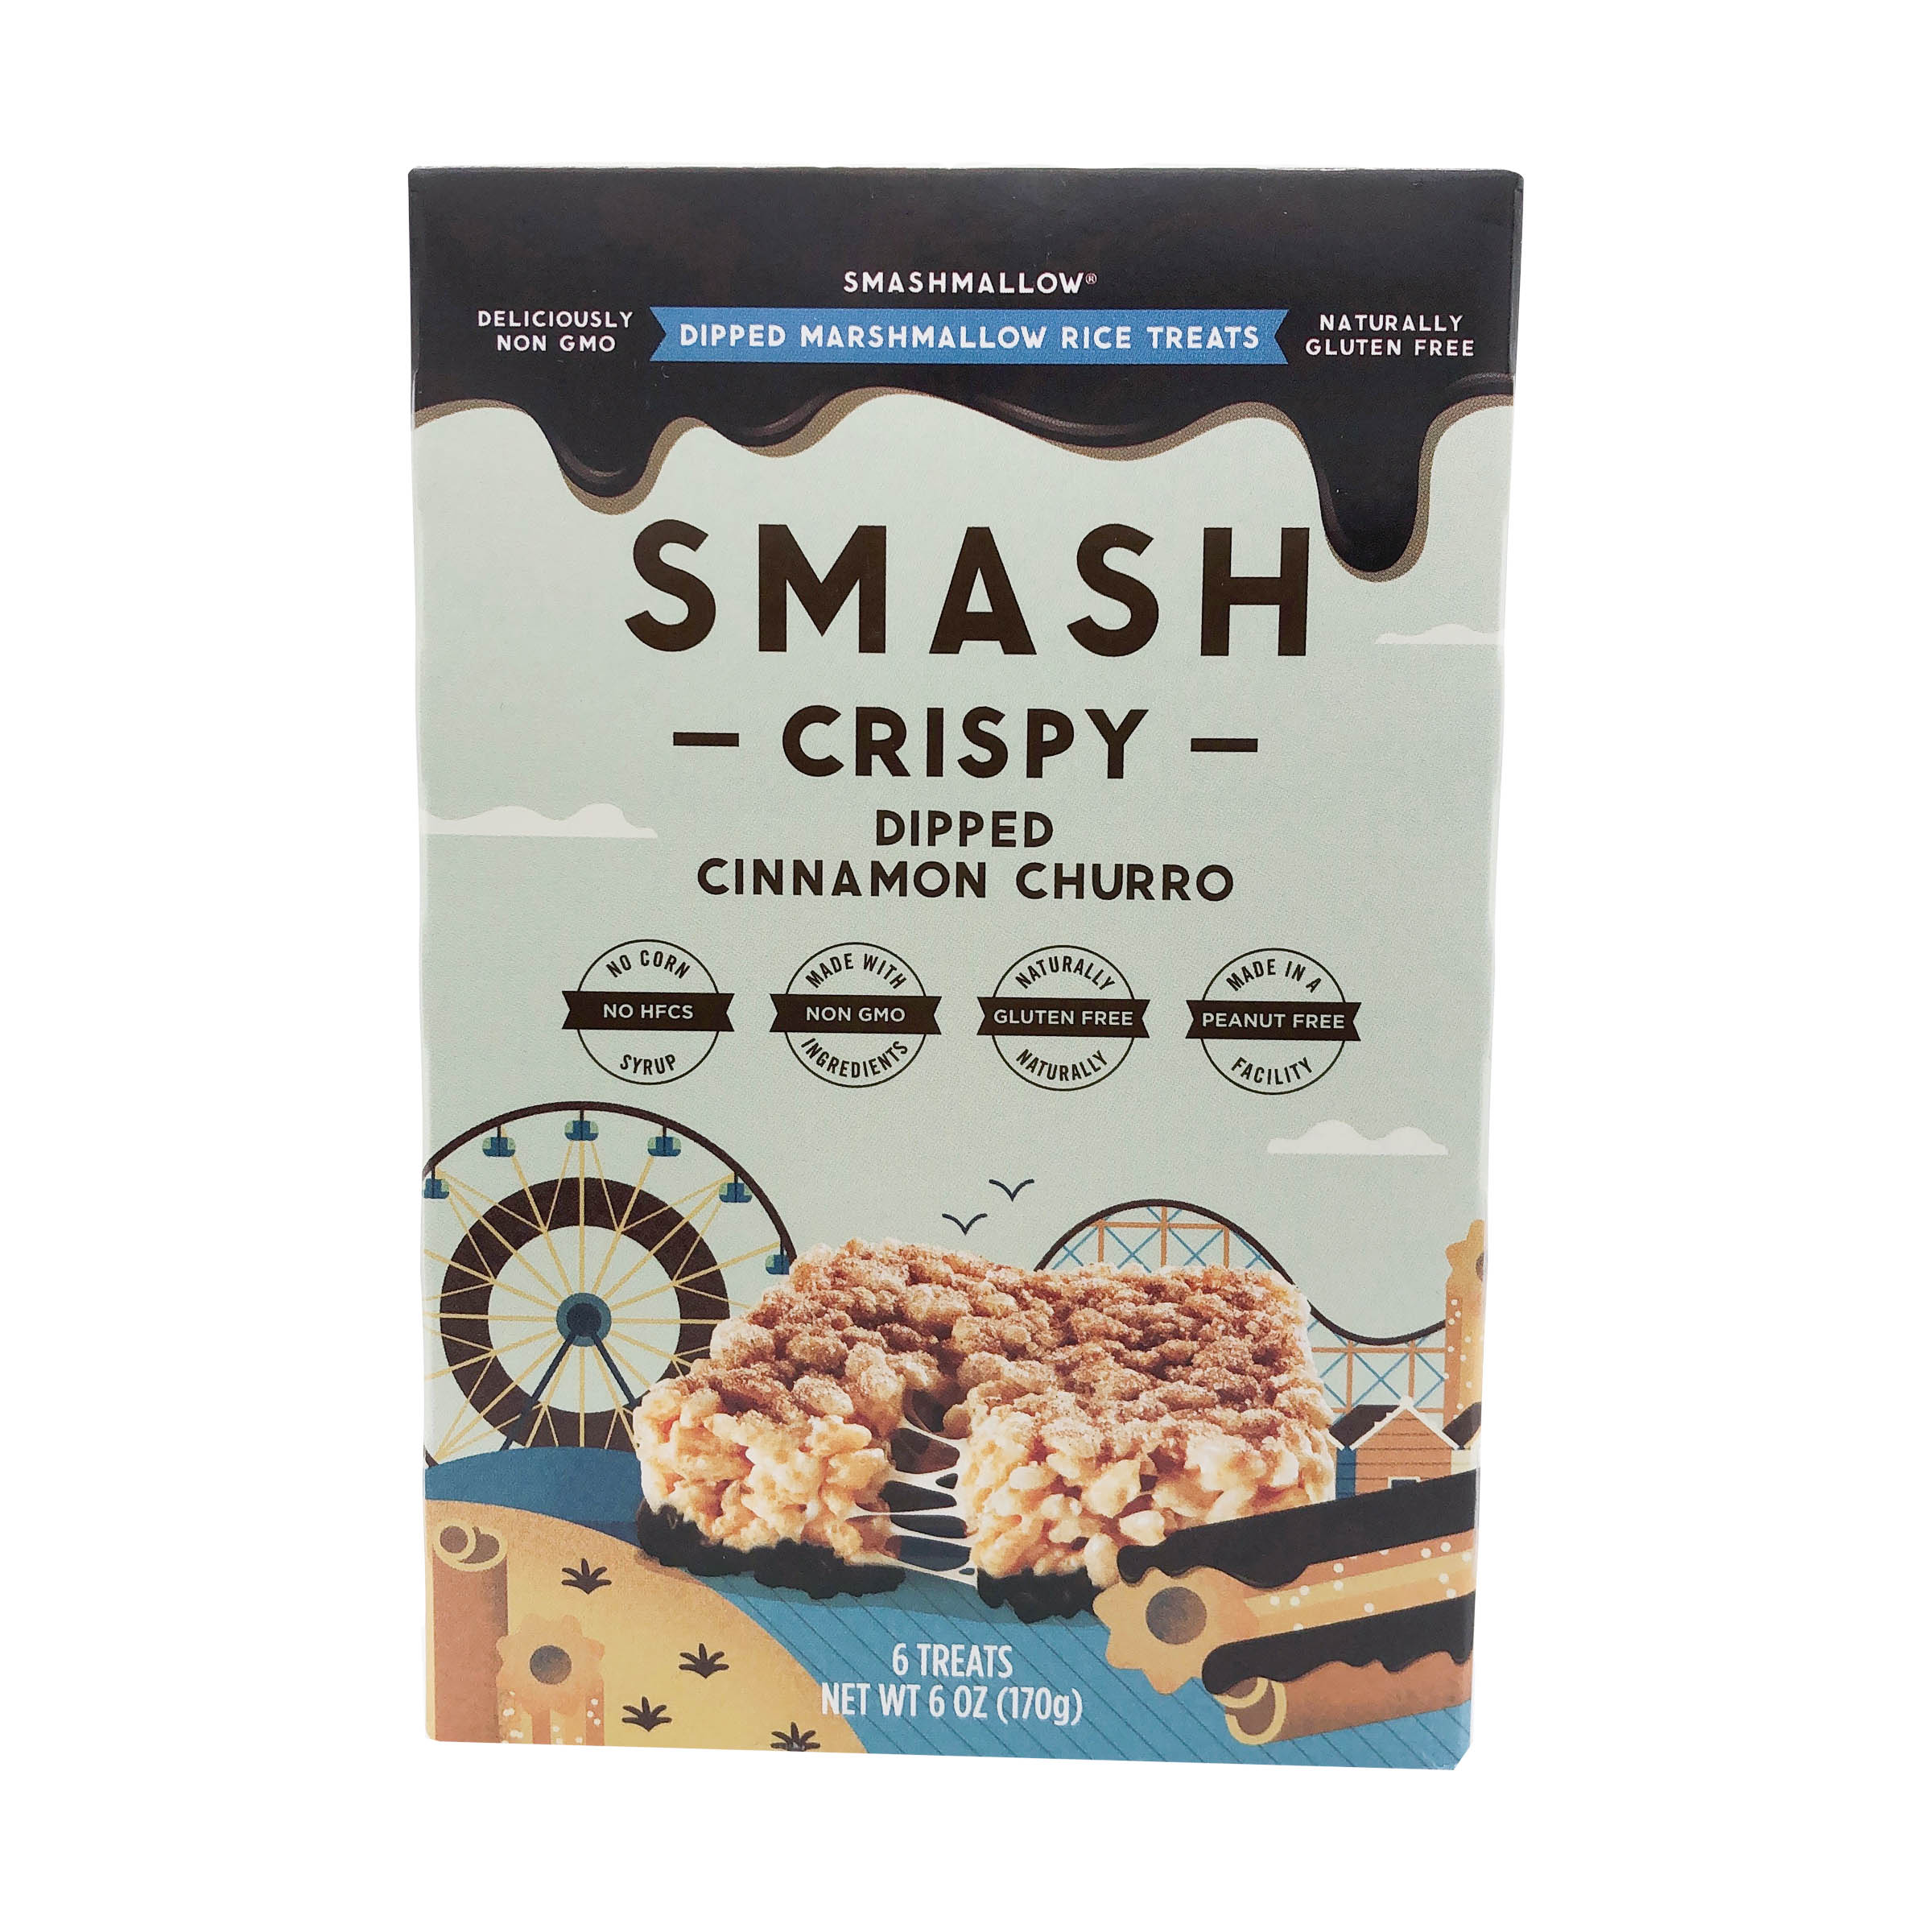 Cinnamon Churro Dipped Crispy Rice Treats 6 Oz Smashmallow Whole Foods Market